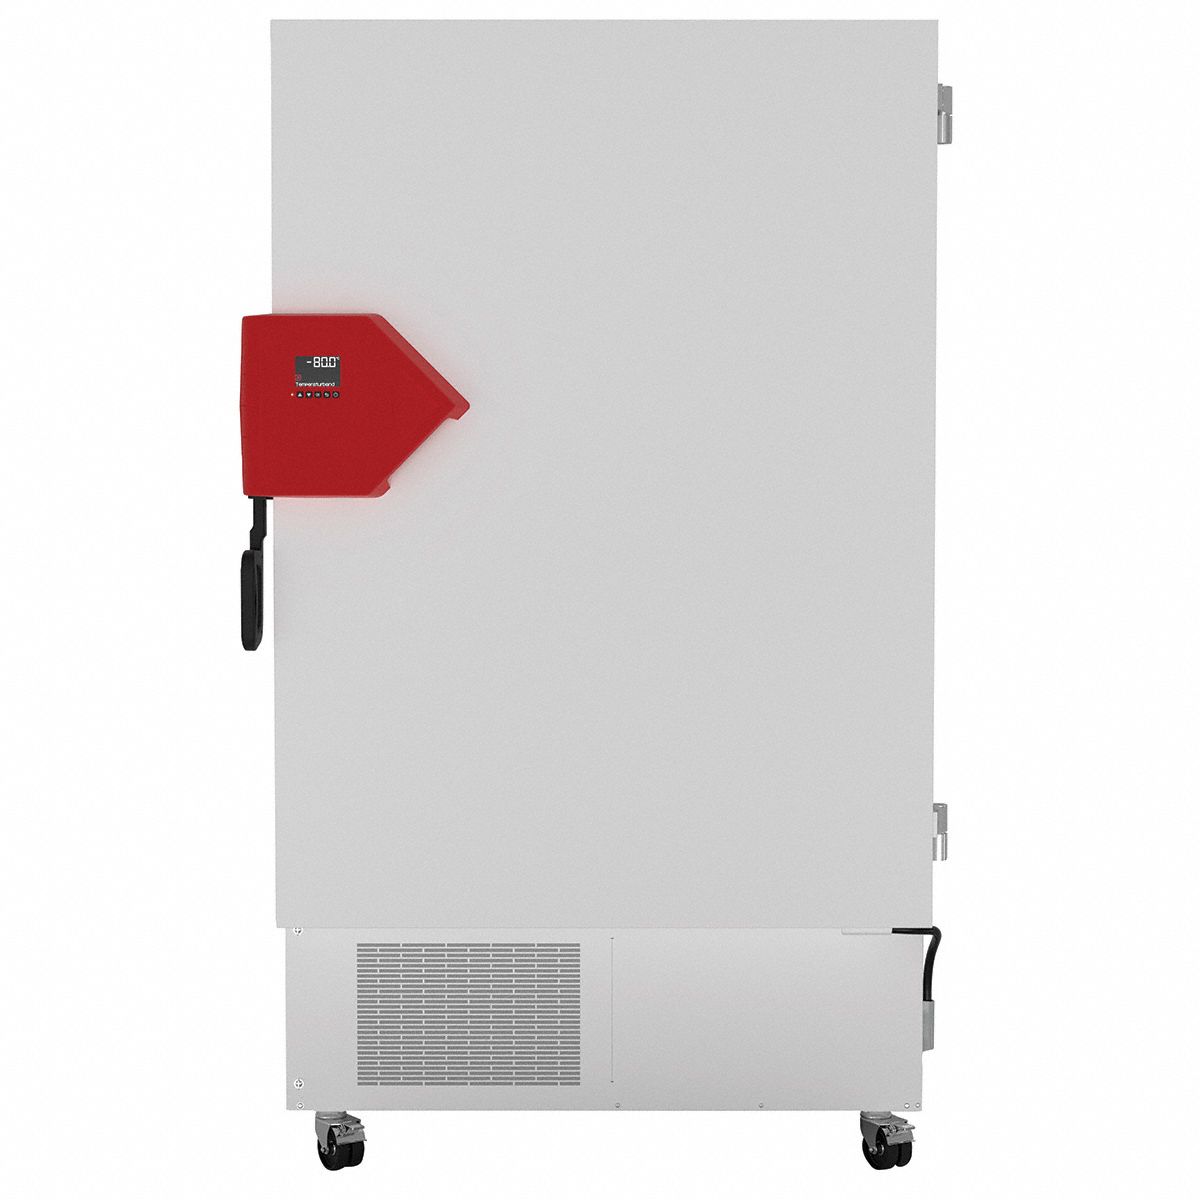 Freezer: 24.7 cu ft Freezer Capacity, -90° to -40° Freezer Temp Range (C), Frost-Free